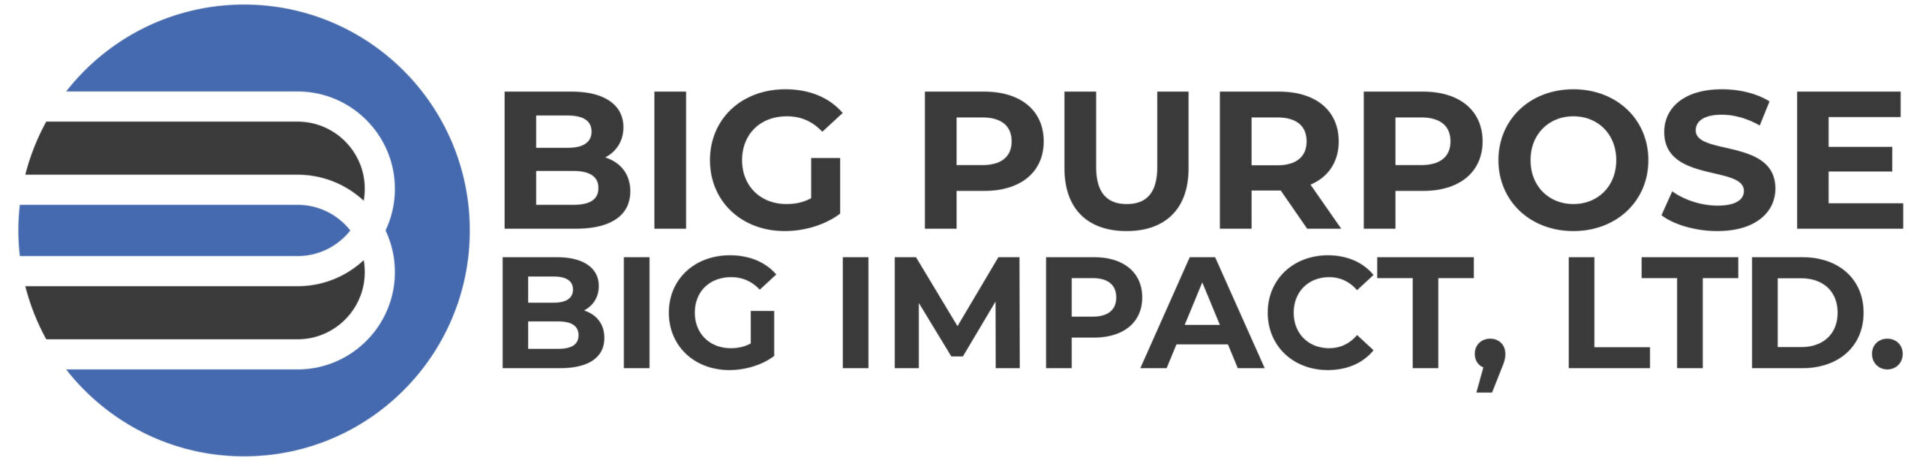 Big Purpose Big Impact Ltd.